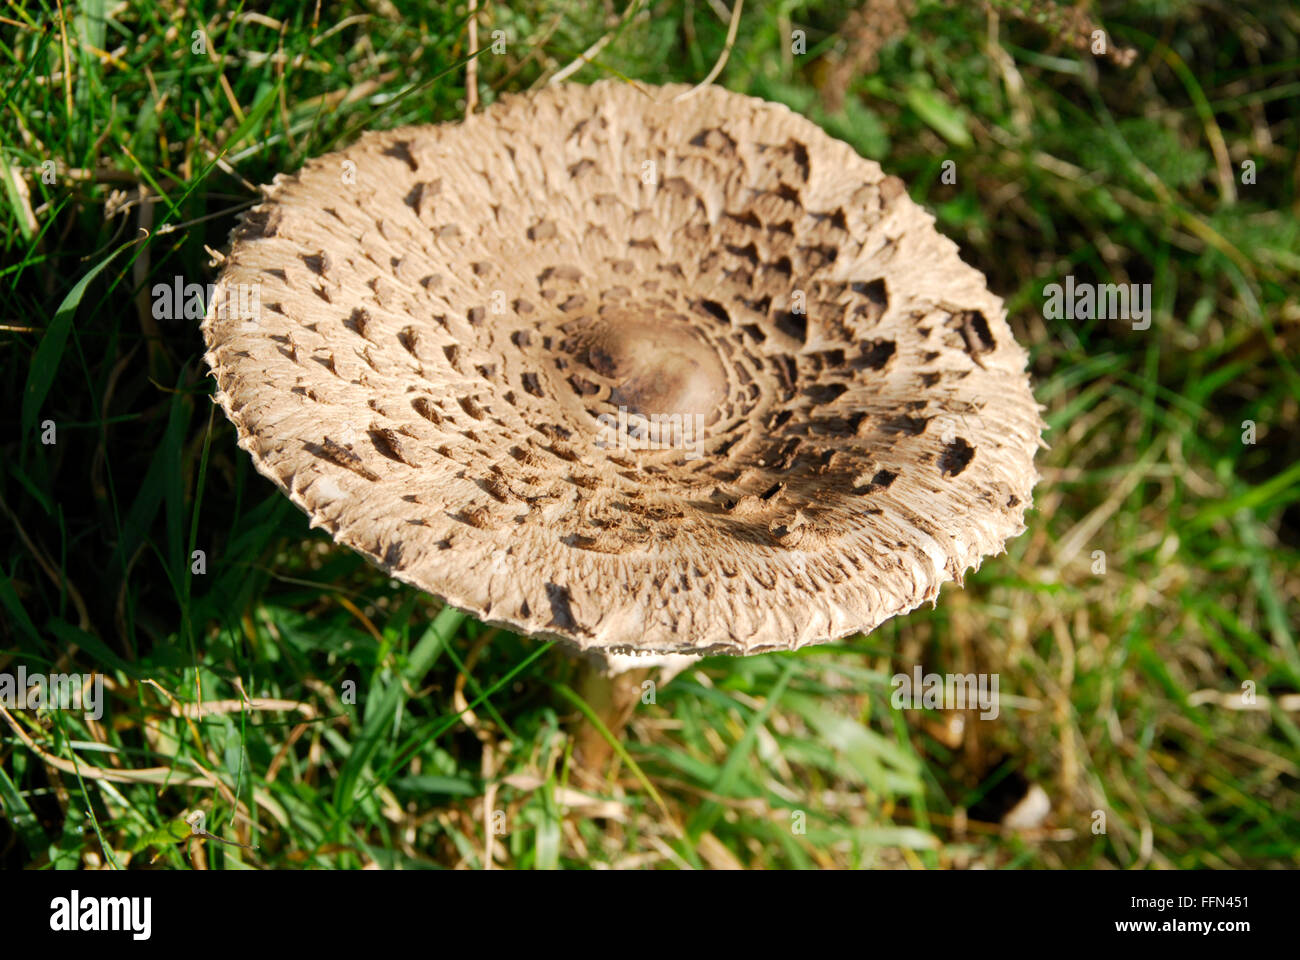 Parasol mushroom, Macrolepiota procera, showing the cap.  This specimen is 4 to 5 inches in diameter. Stock Photo